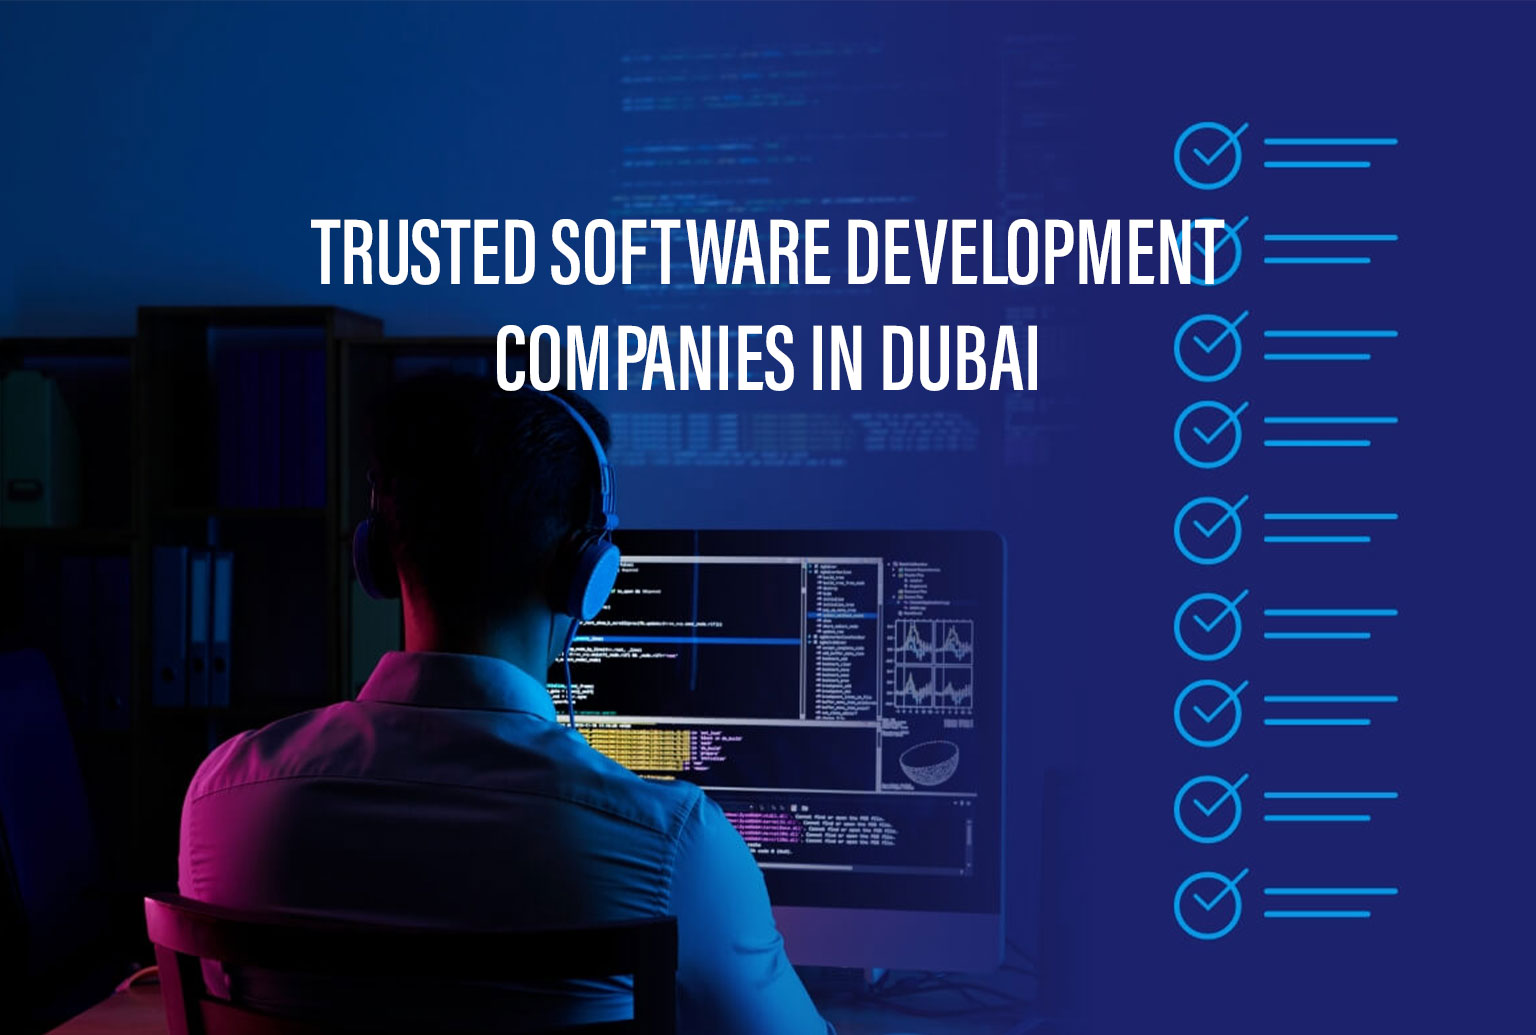 Software Development Companies in Dubai